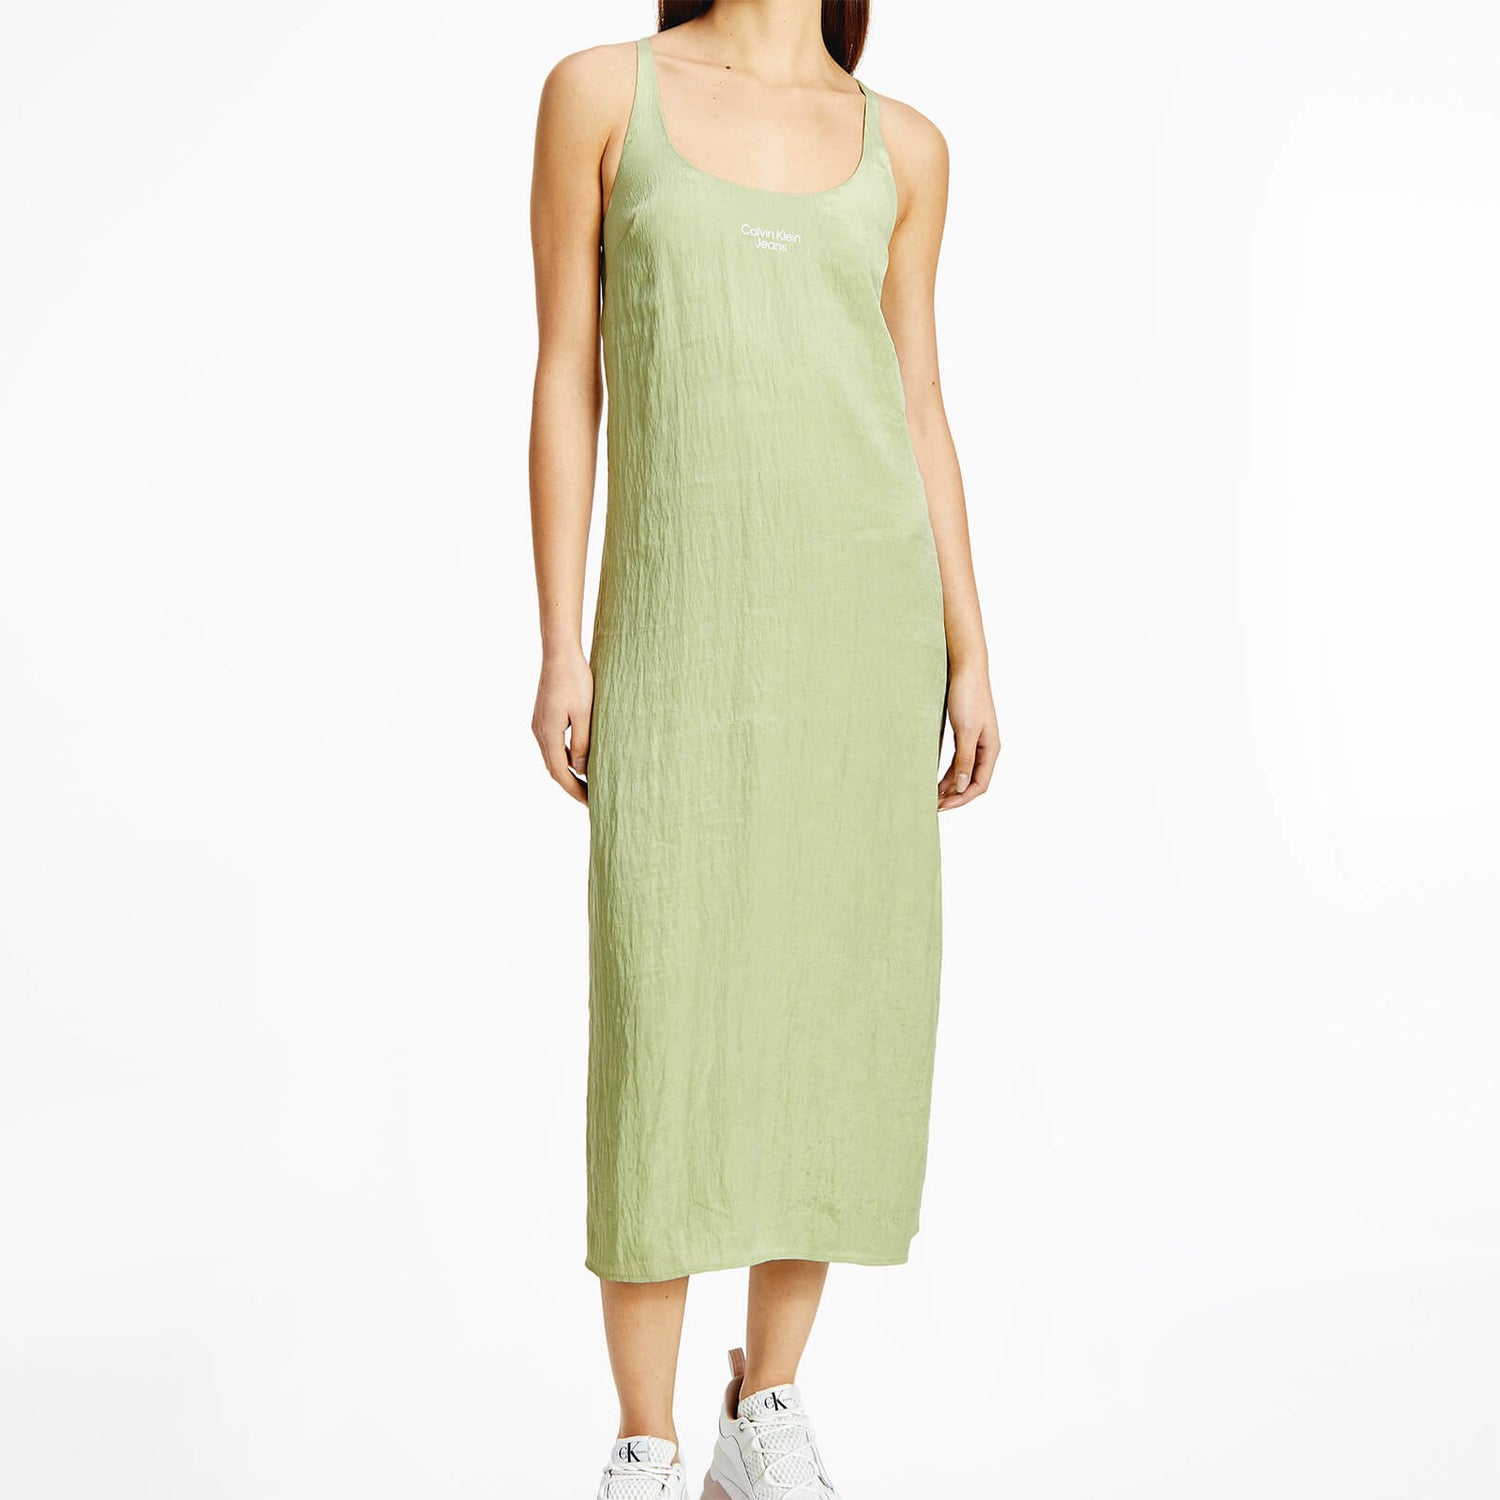 Calvin Klein Jeans Women's Glazed Fabric Maxi Dress - Jaded Green - XS